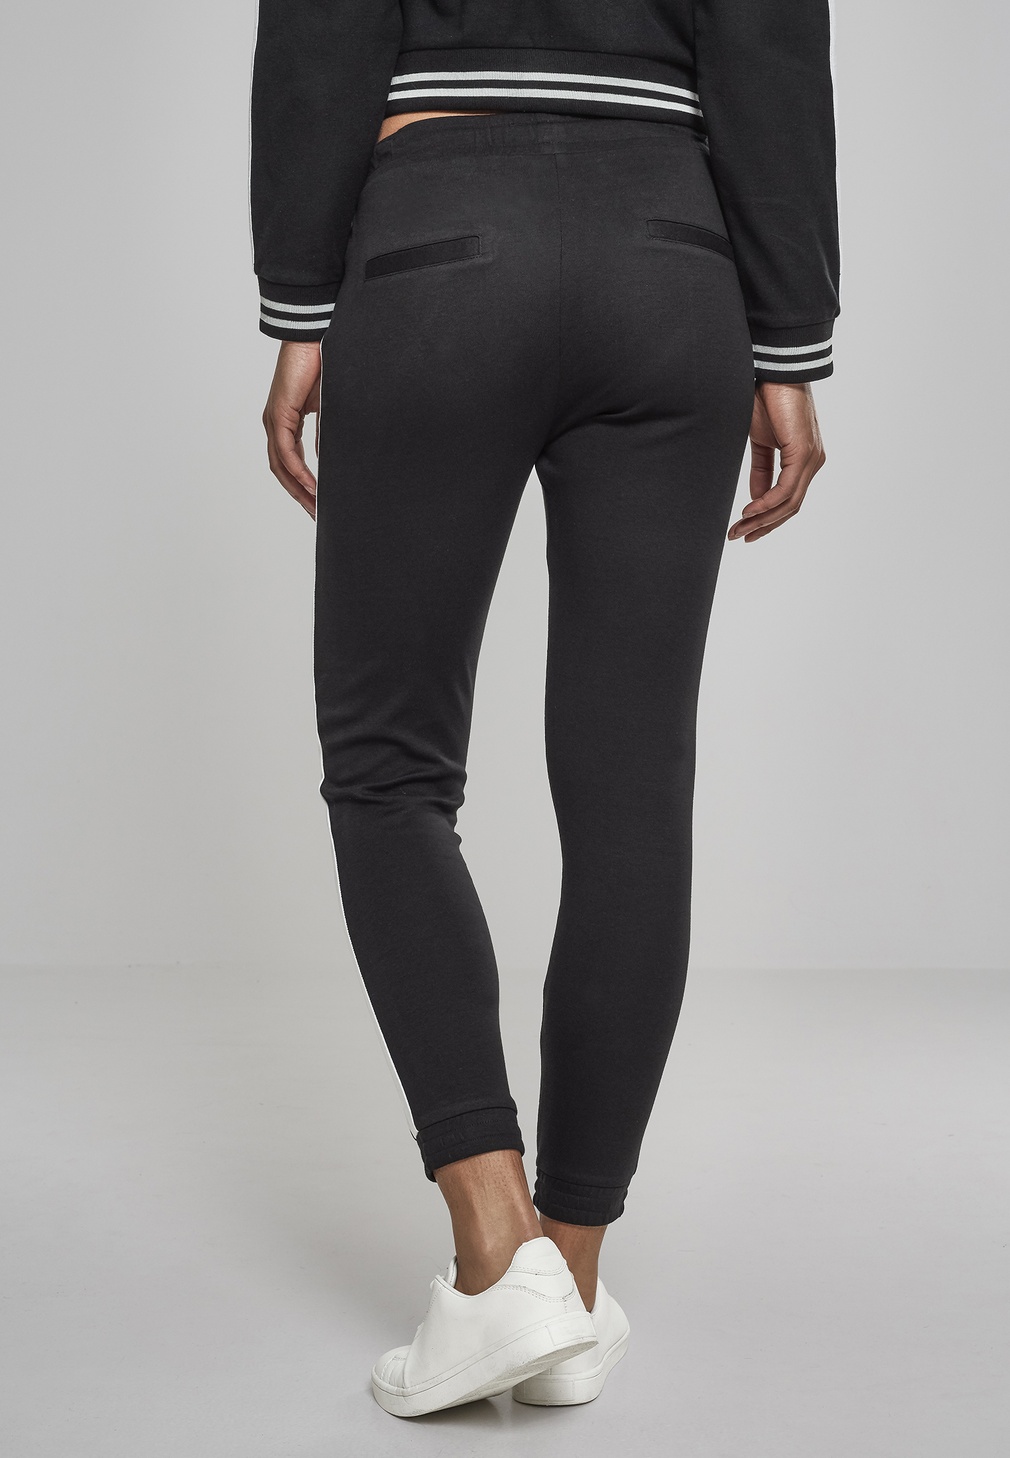 Urban Classics Damen Interlock | Ladies | Sweatpants Lifestyle Damen | Hosen Black/White Jogpants